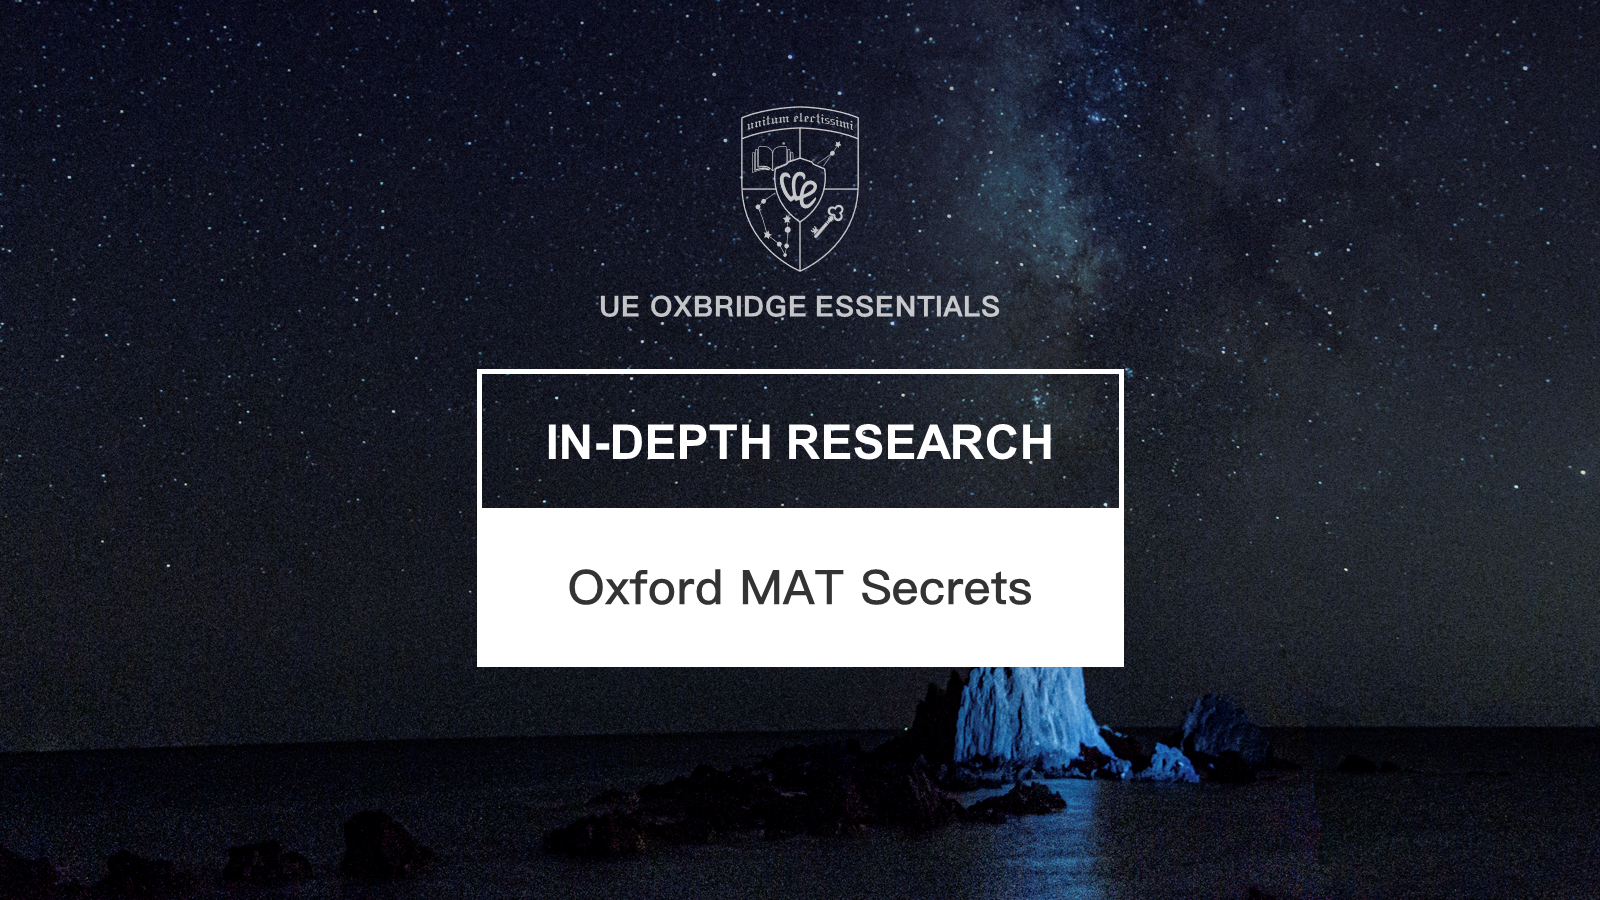 Oxford MAT Secrets - An In-depth Research